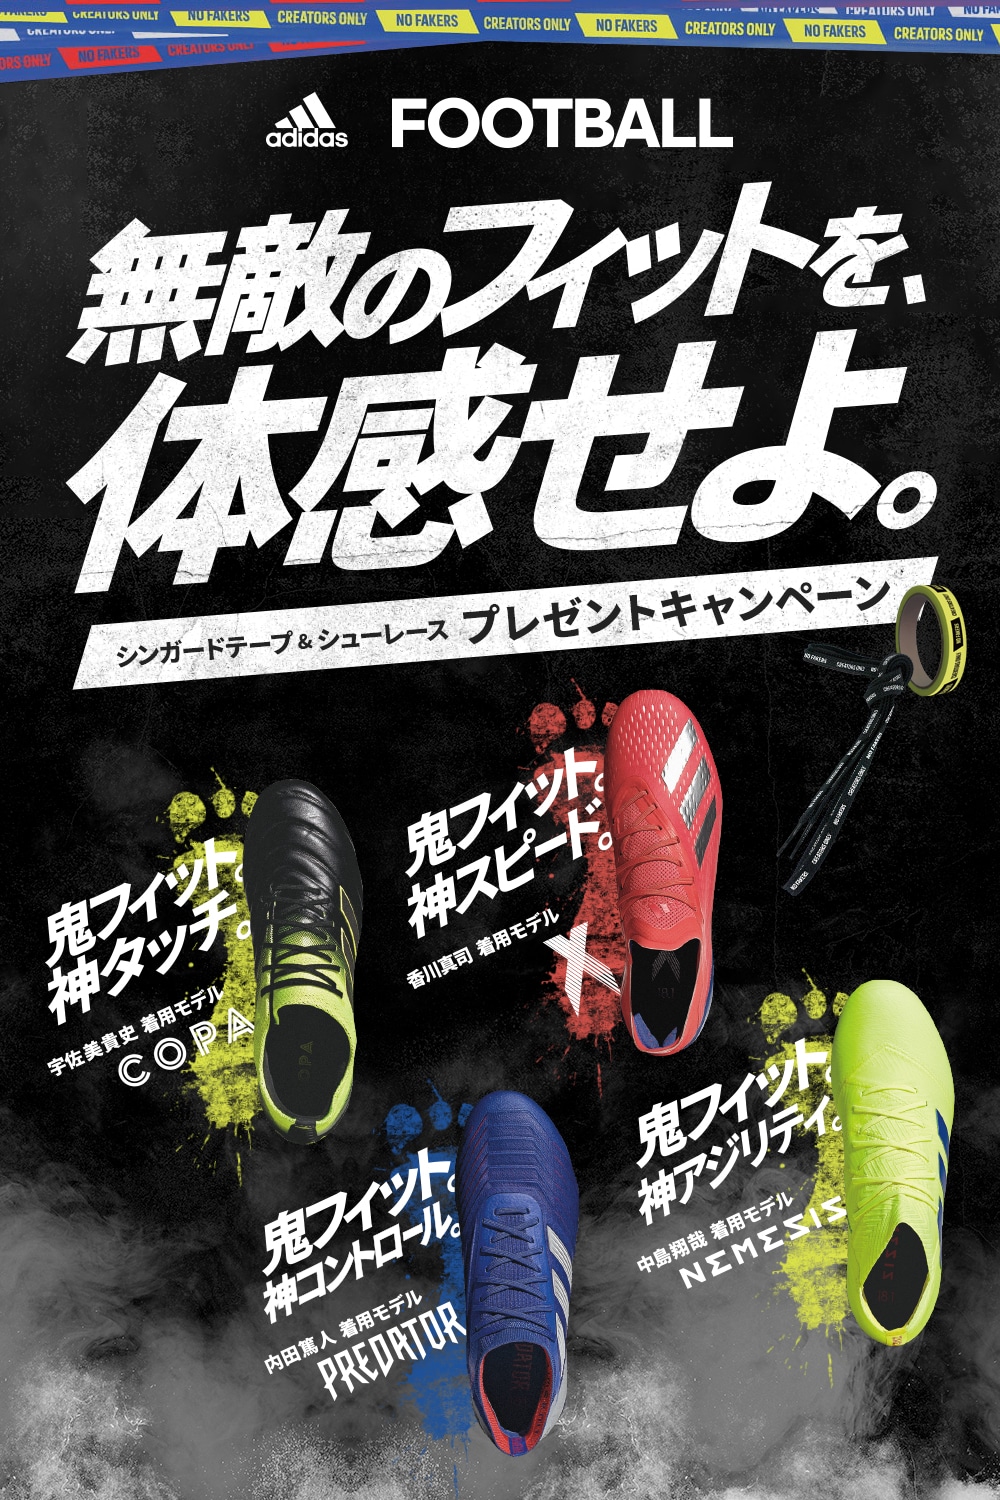 Bukatsu Campaign Adidas アディダス サッカーショップkamo